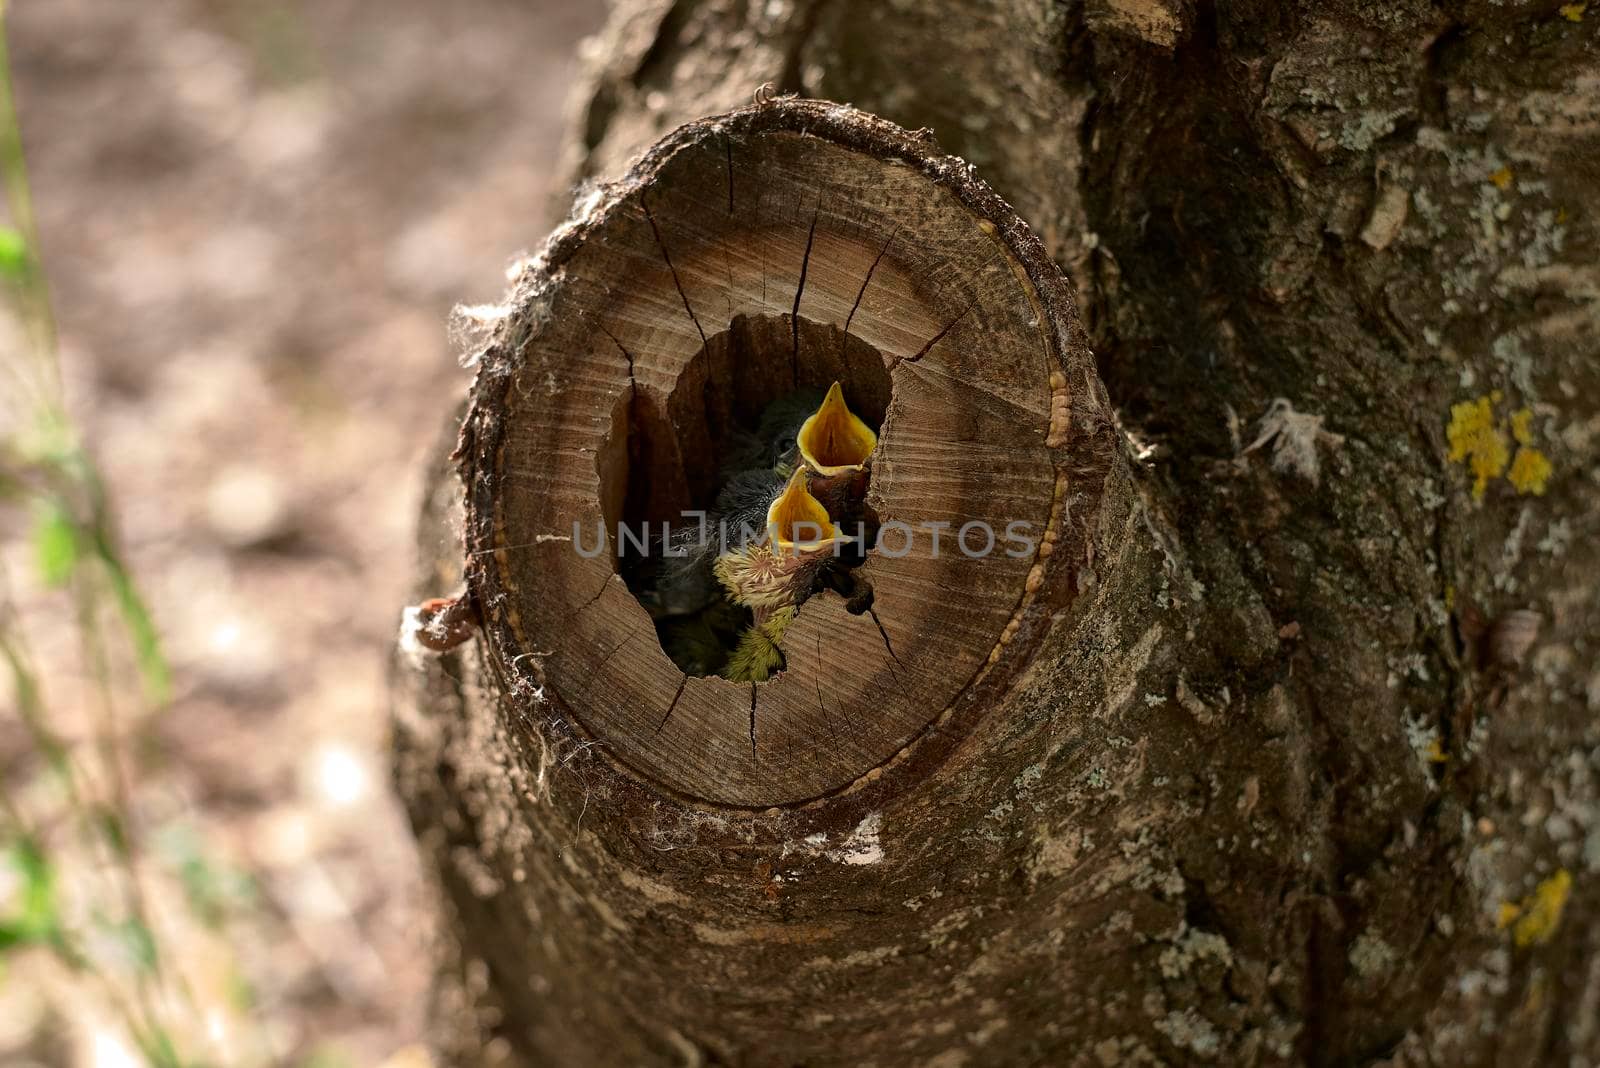 Two small birds in a nest inside a tree by raul_ruiz